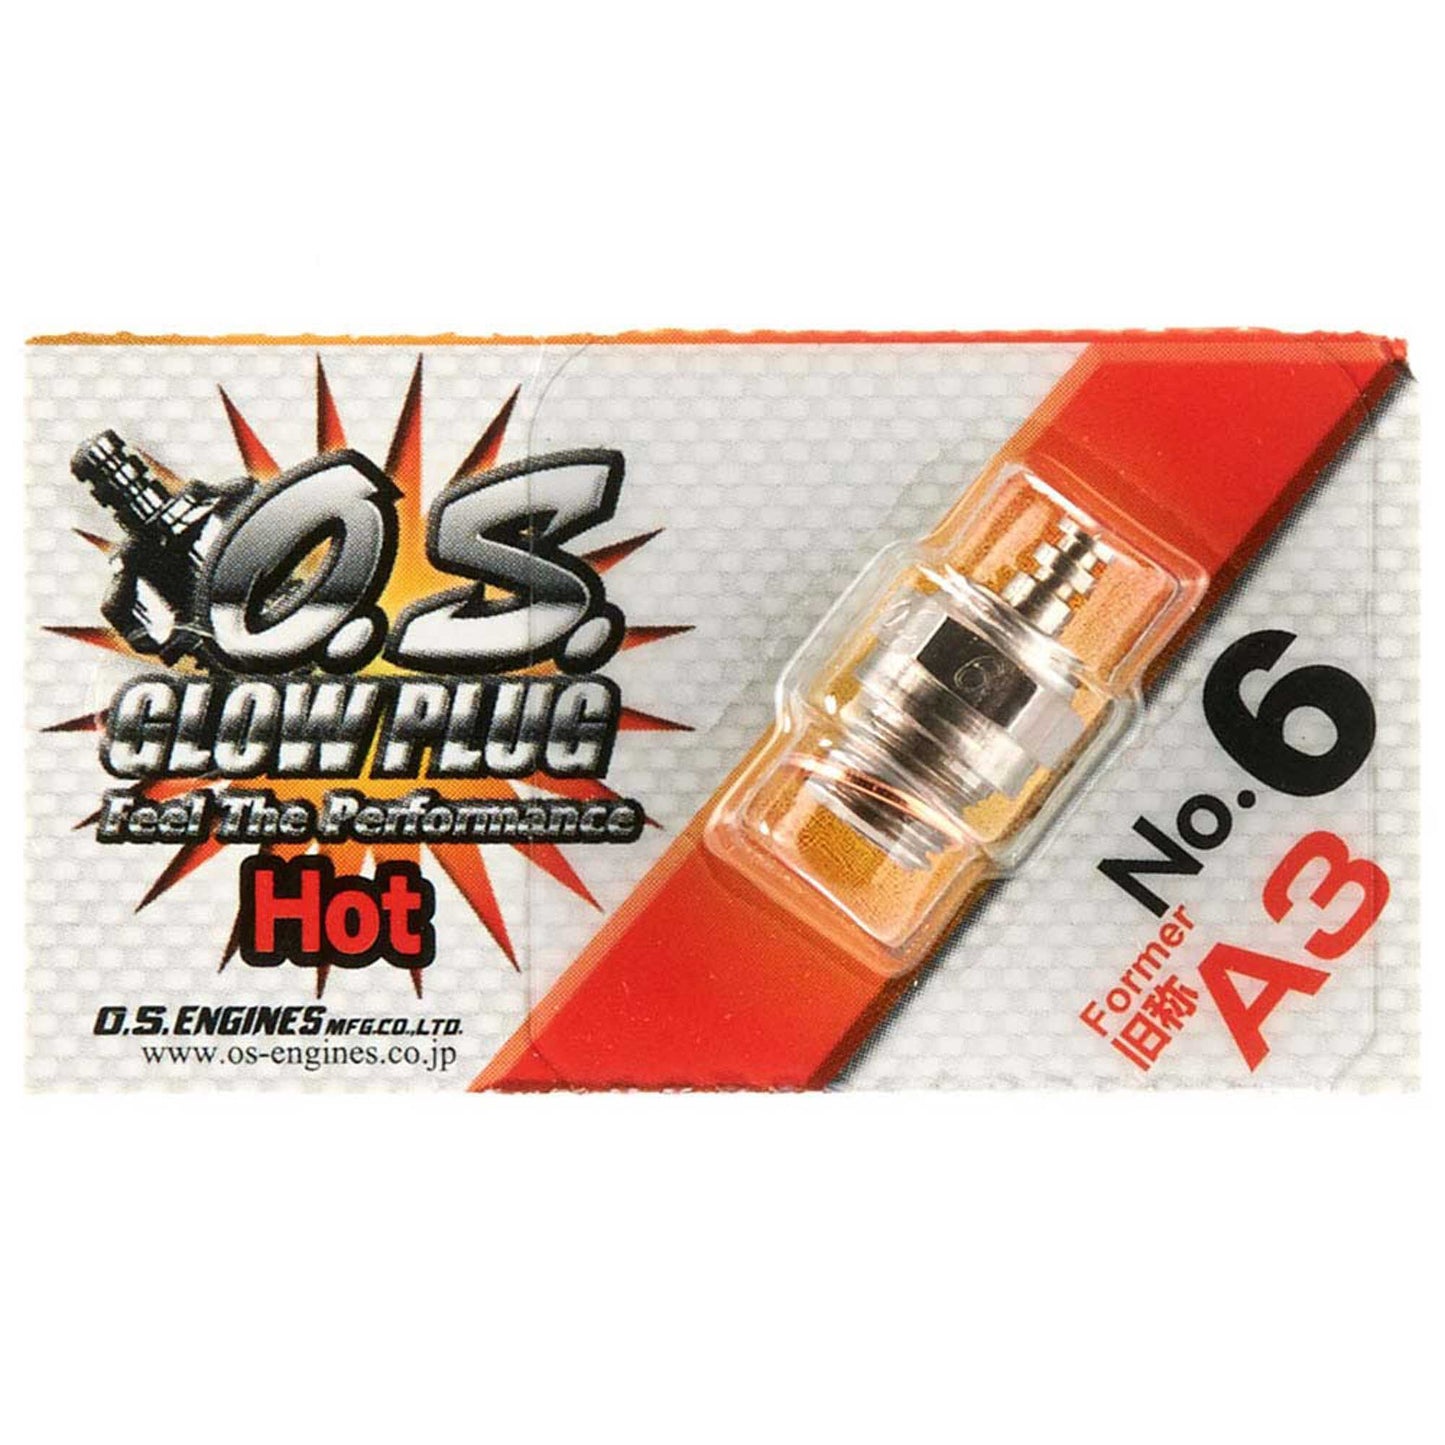 O.S Max #6 (A3) Glow Plug Hot